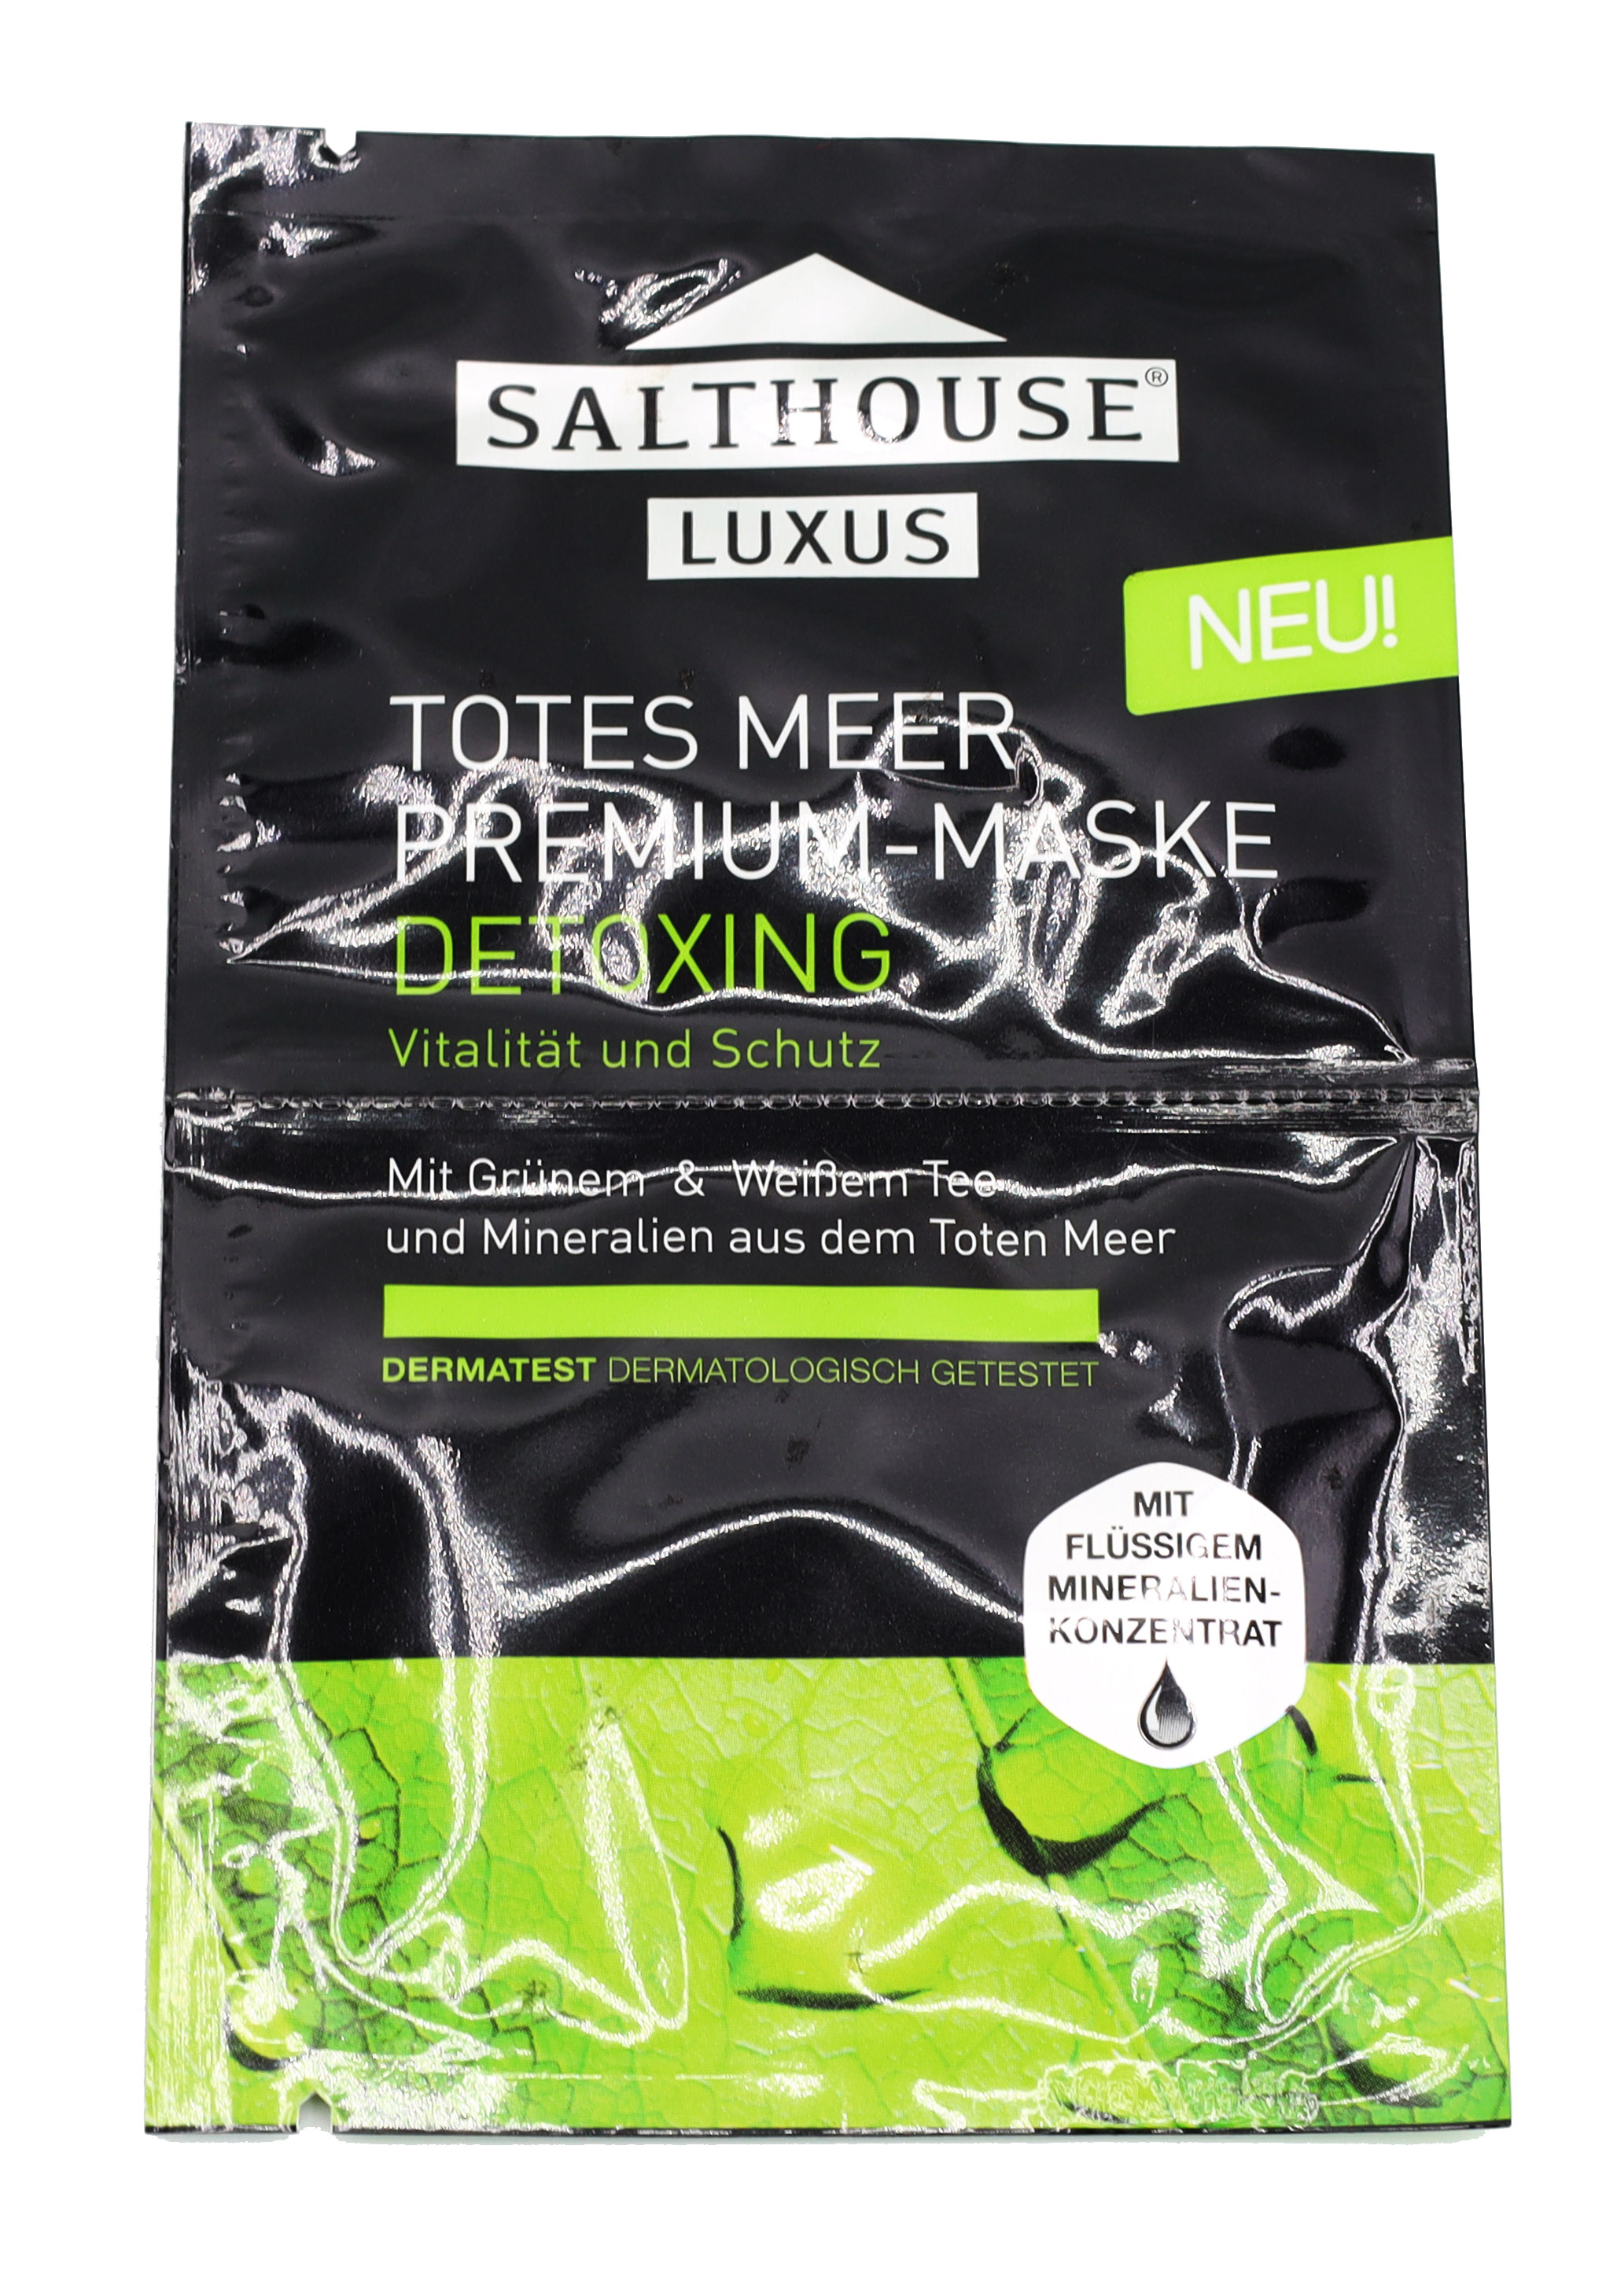 Salthouse Luxus Totes Meer Premium-Maske 2x5ml Detoxing